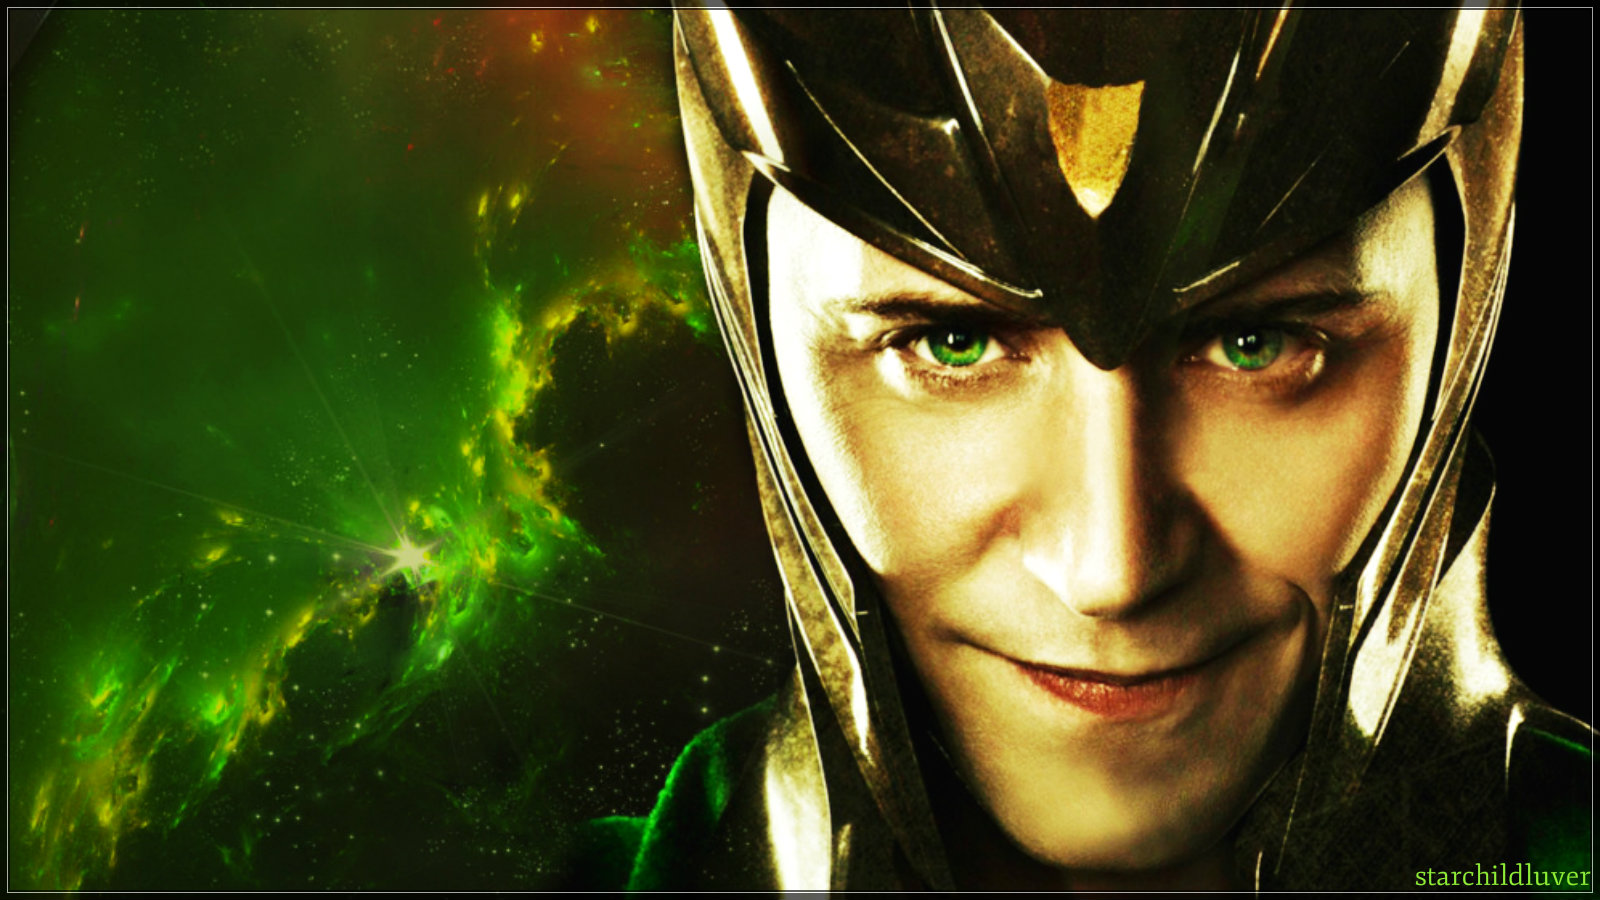 Tom Hiddleston as Loki - Tom Hiddleston Wallpaper (36653067) - Fanpop Tom Hiddleston Loki Avengers Wallpaper